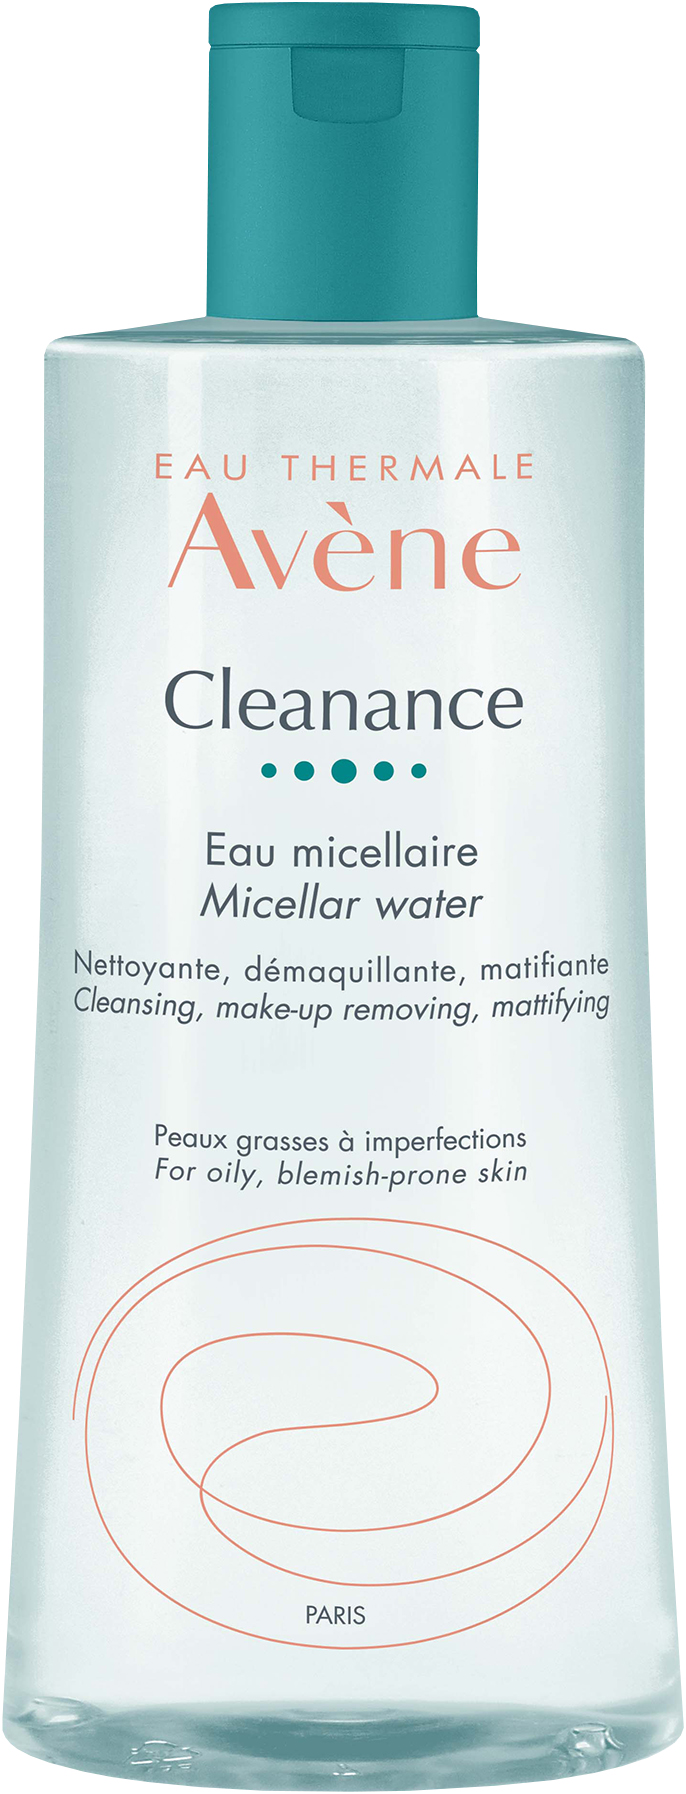 Cleanance Micellar Water, 400 ml